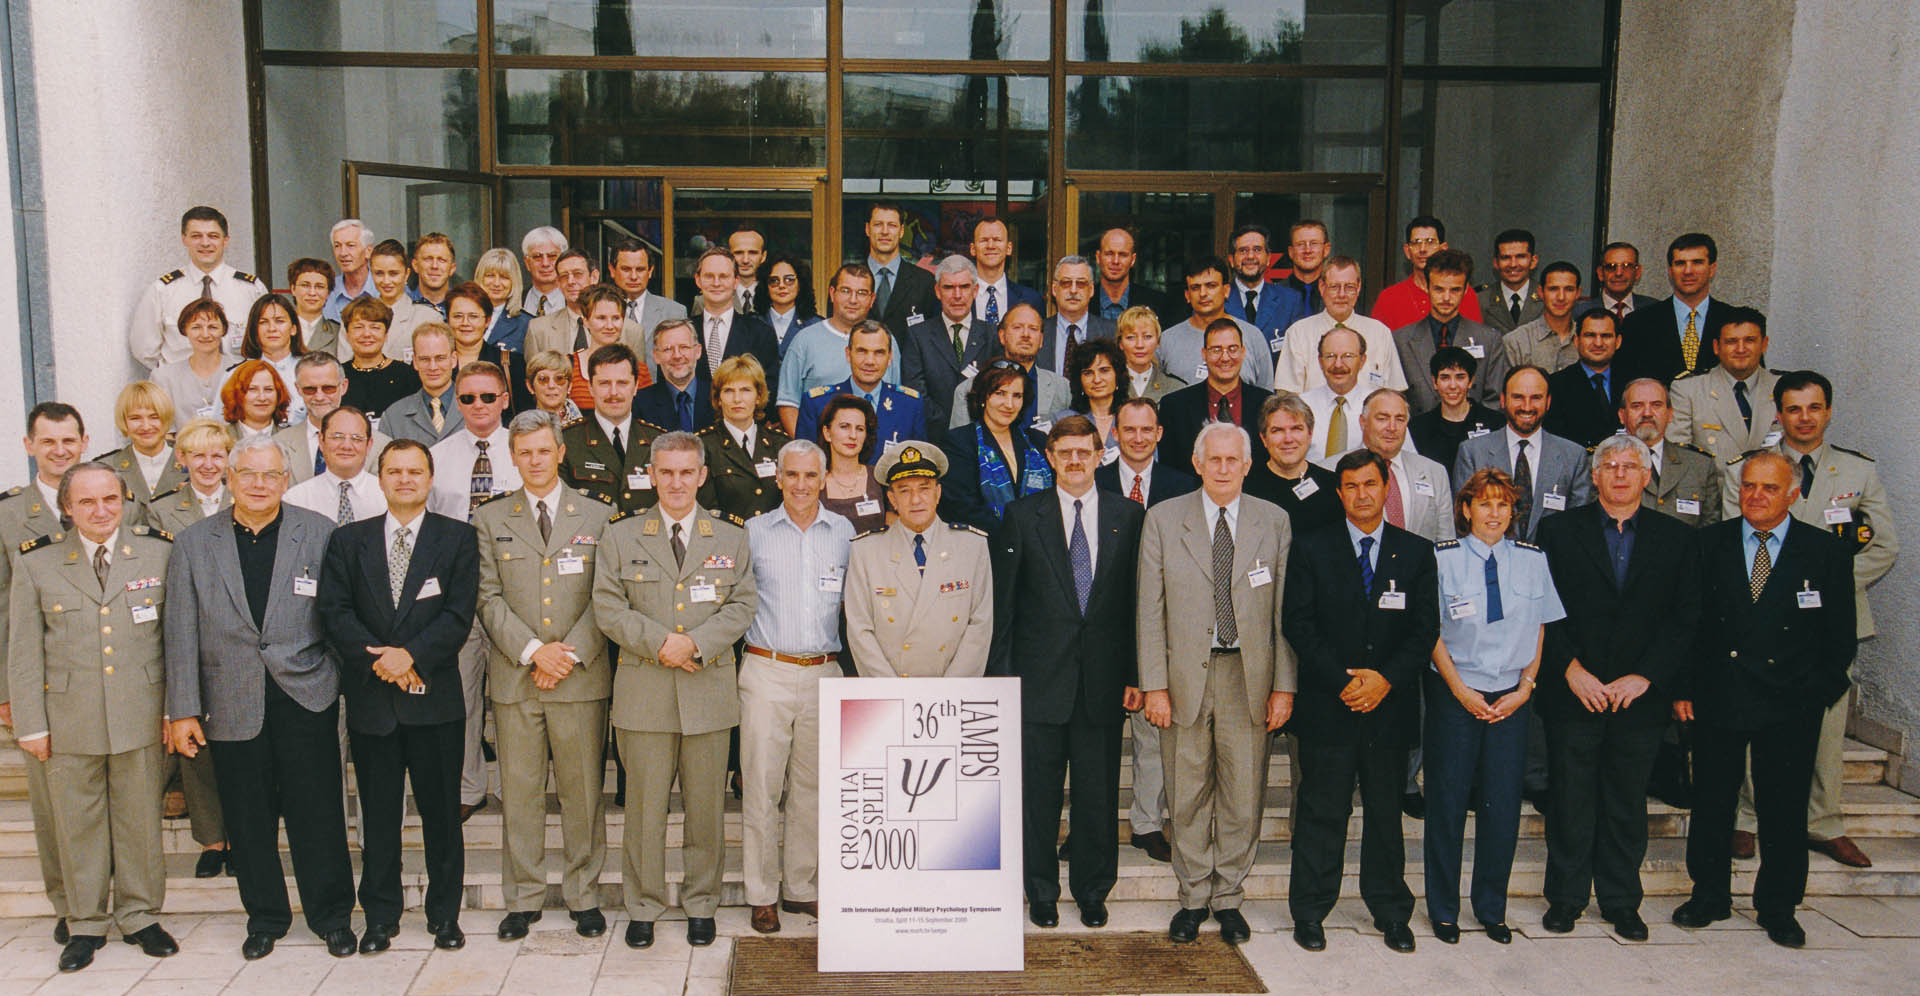 Group photo of IAMPS 2000